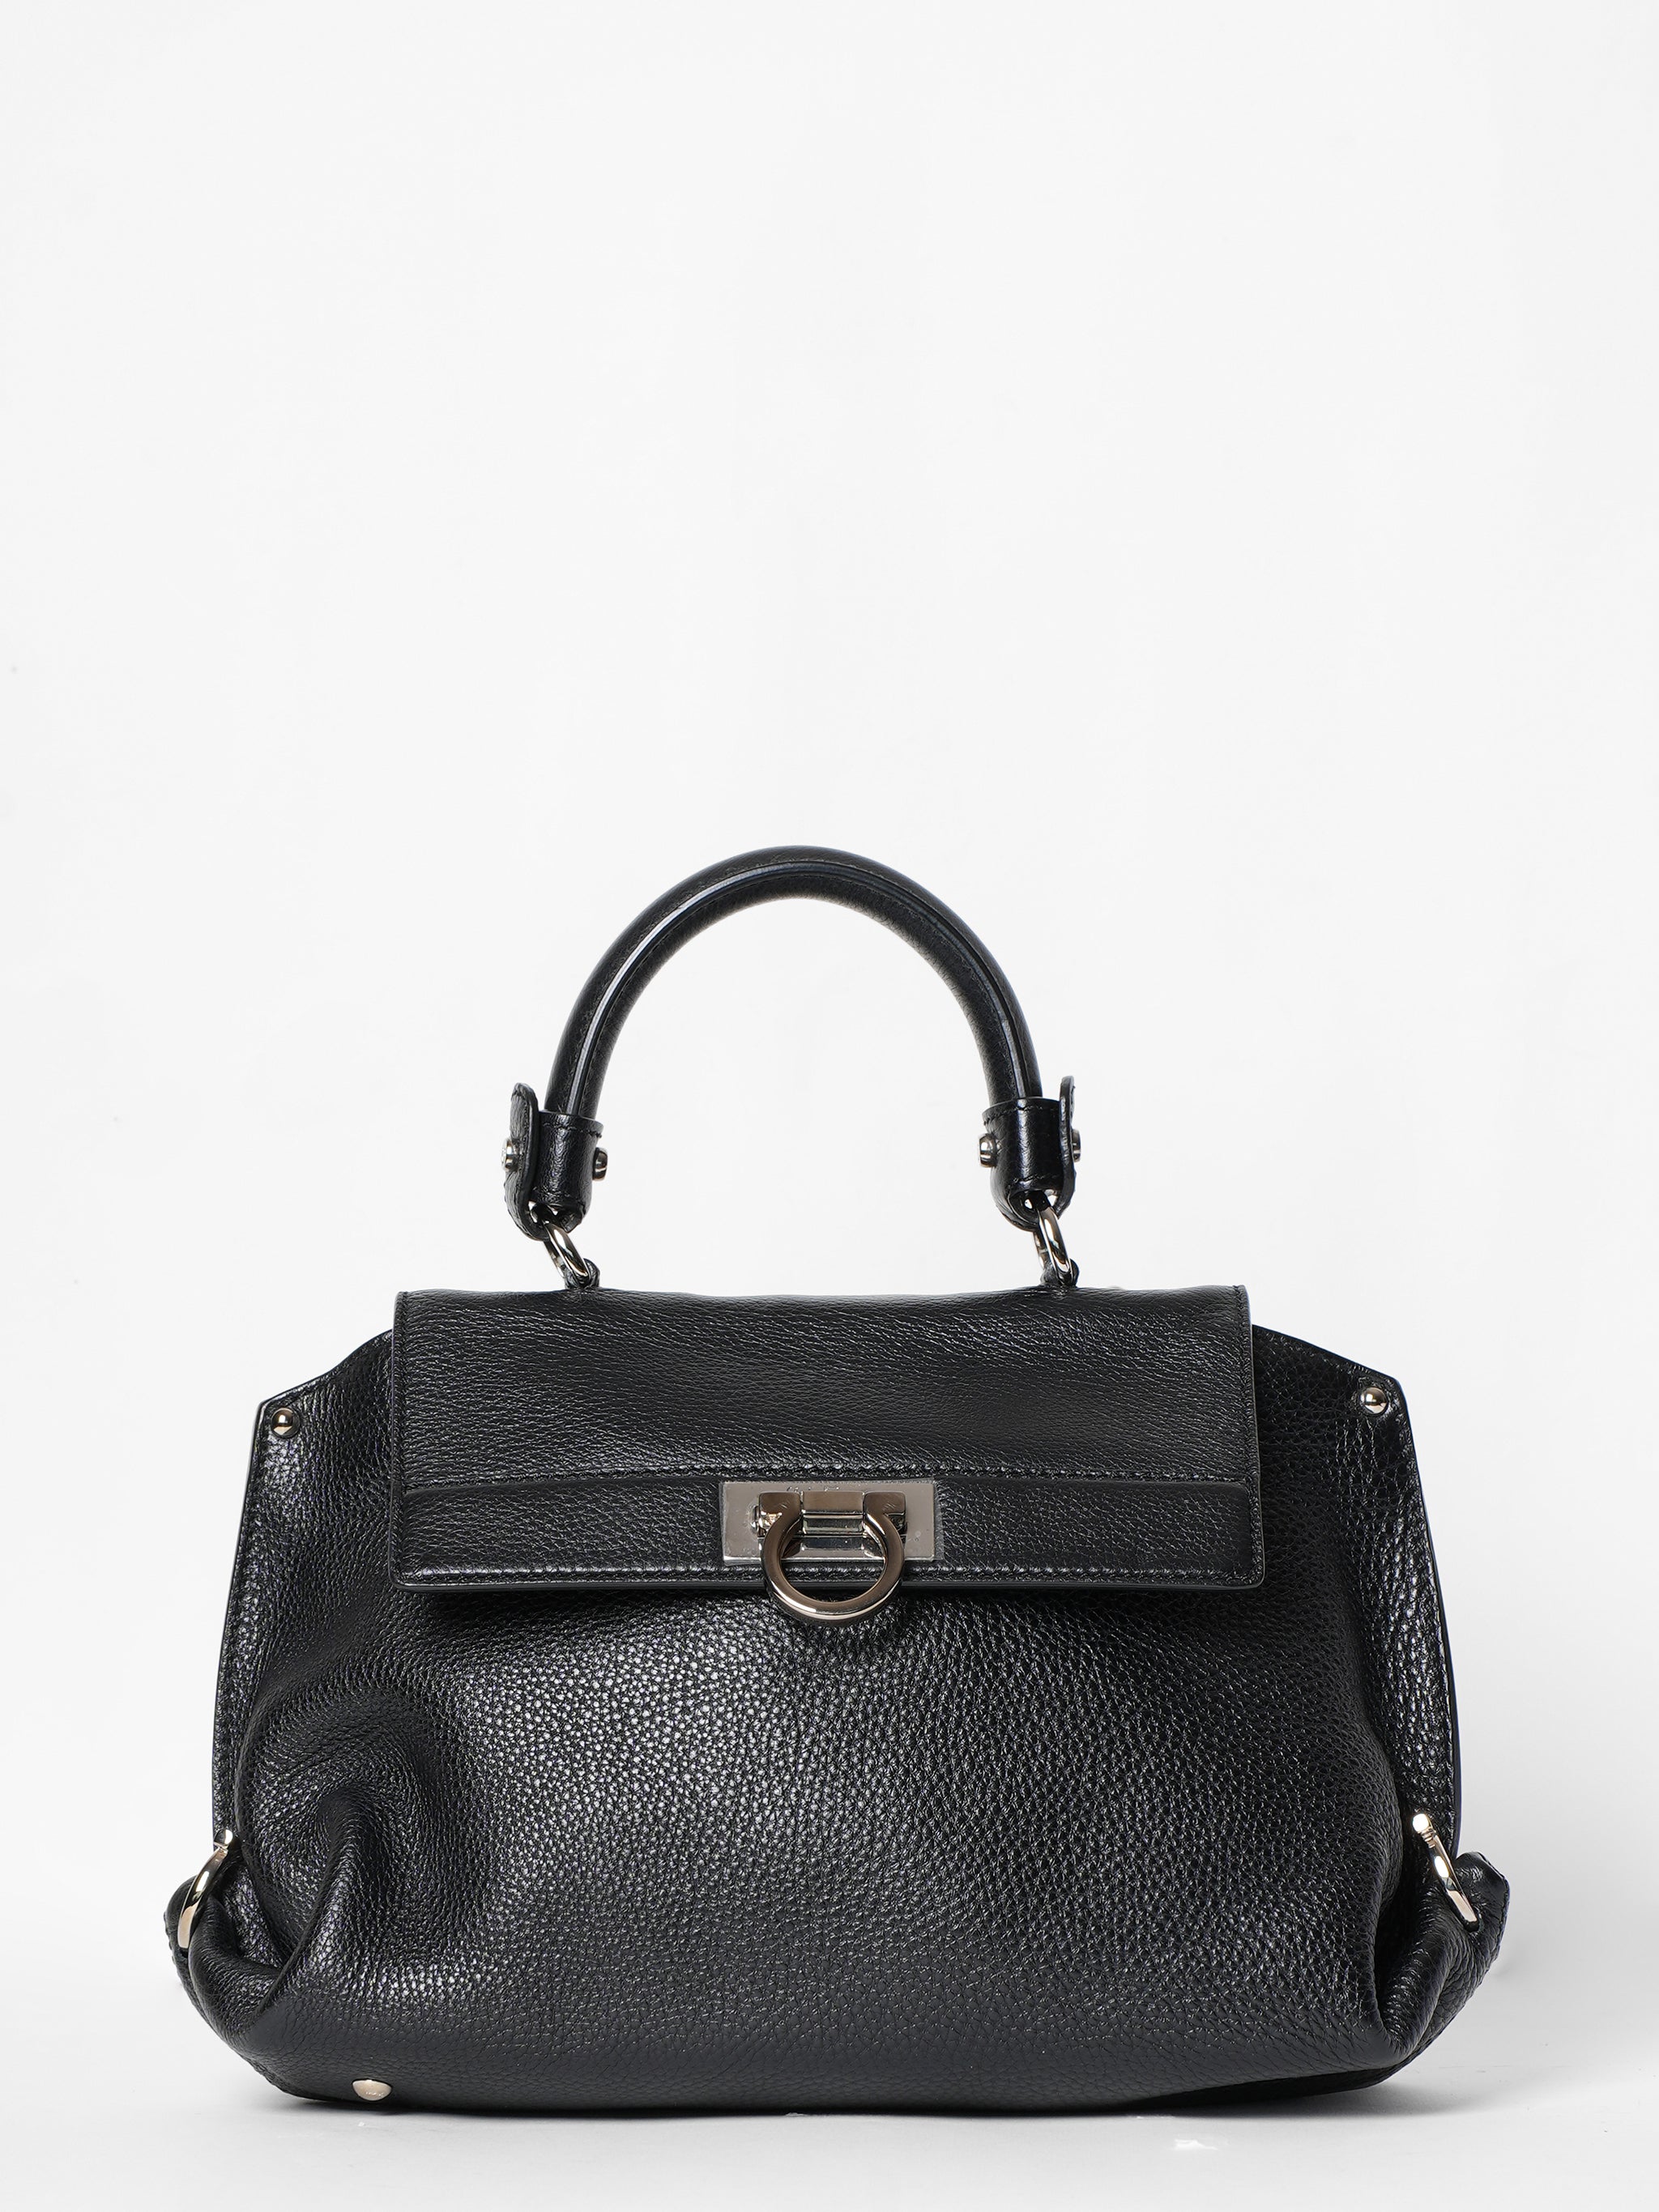 New Ferragamo Pebbled Leather Bag